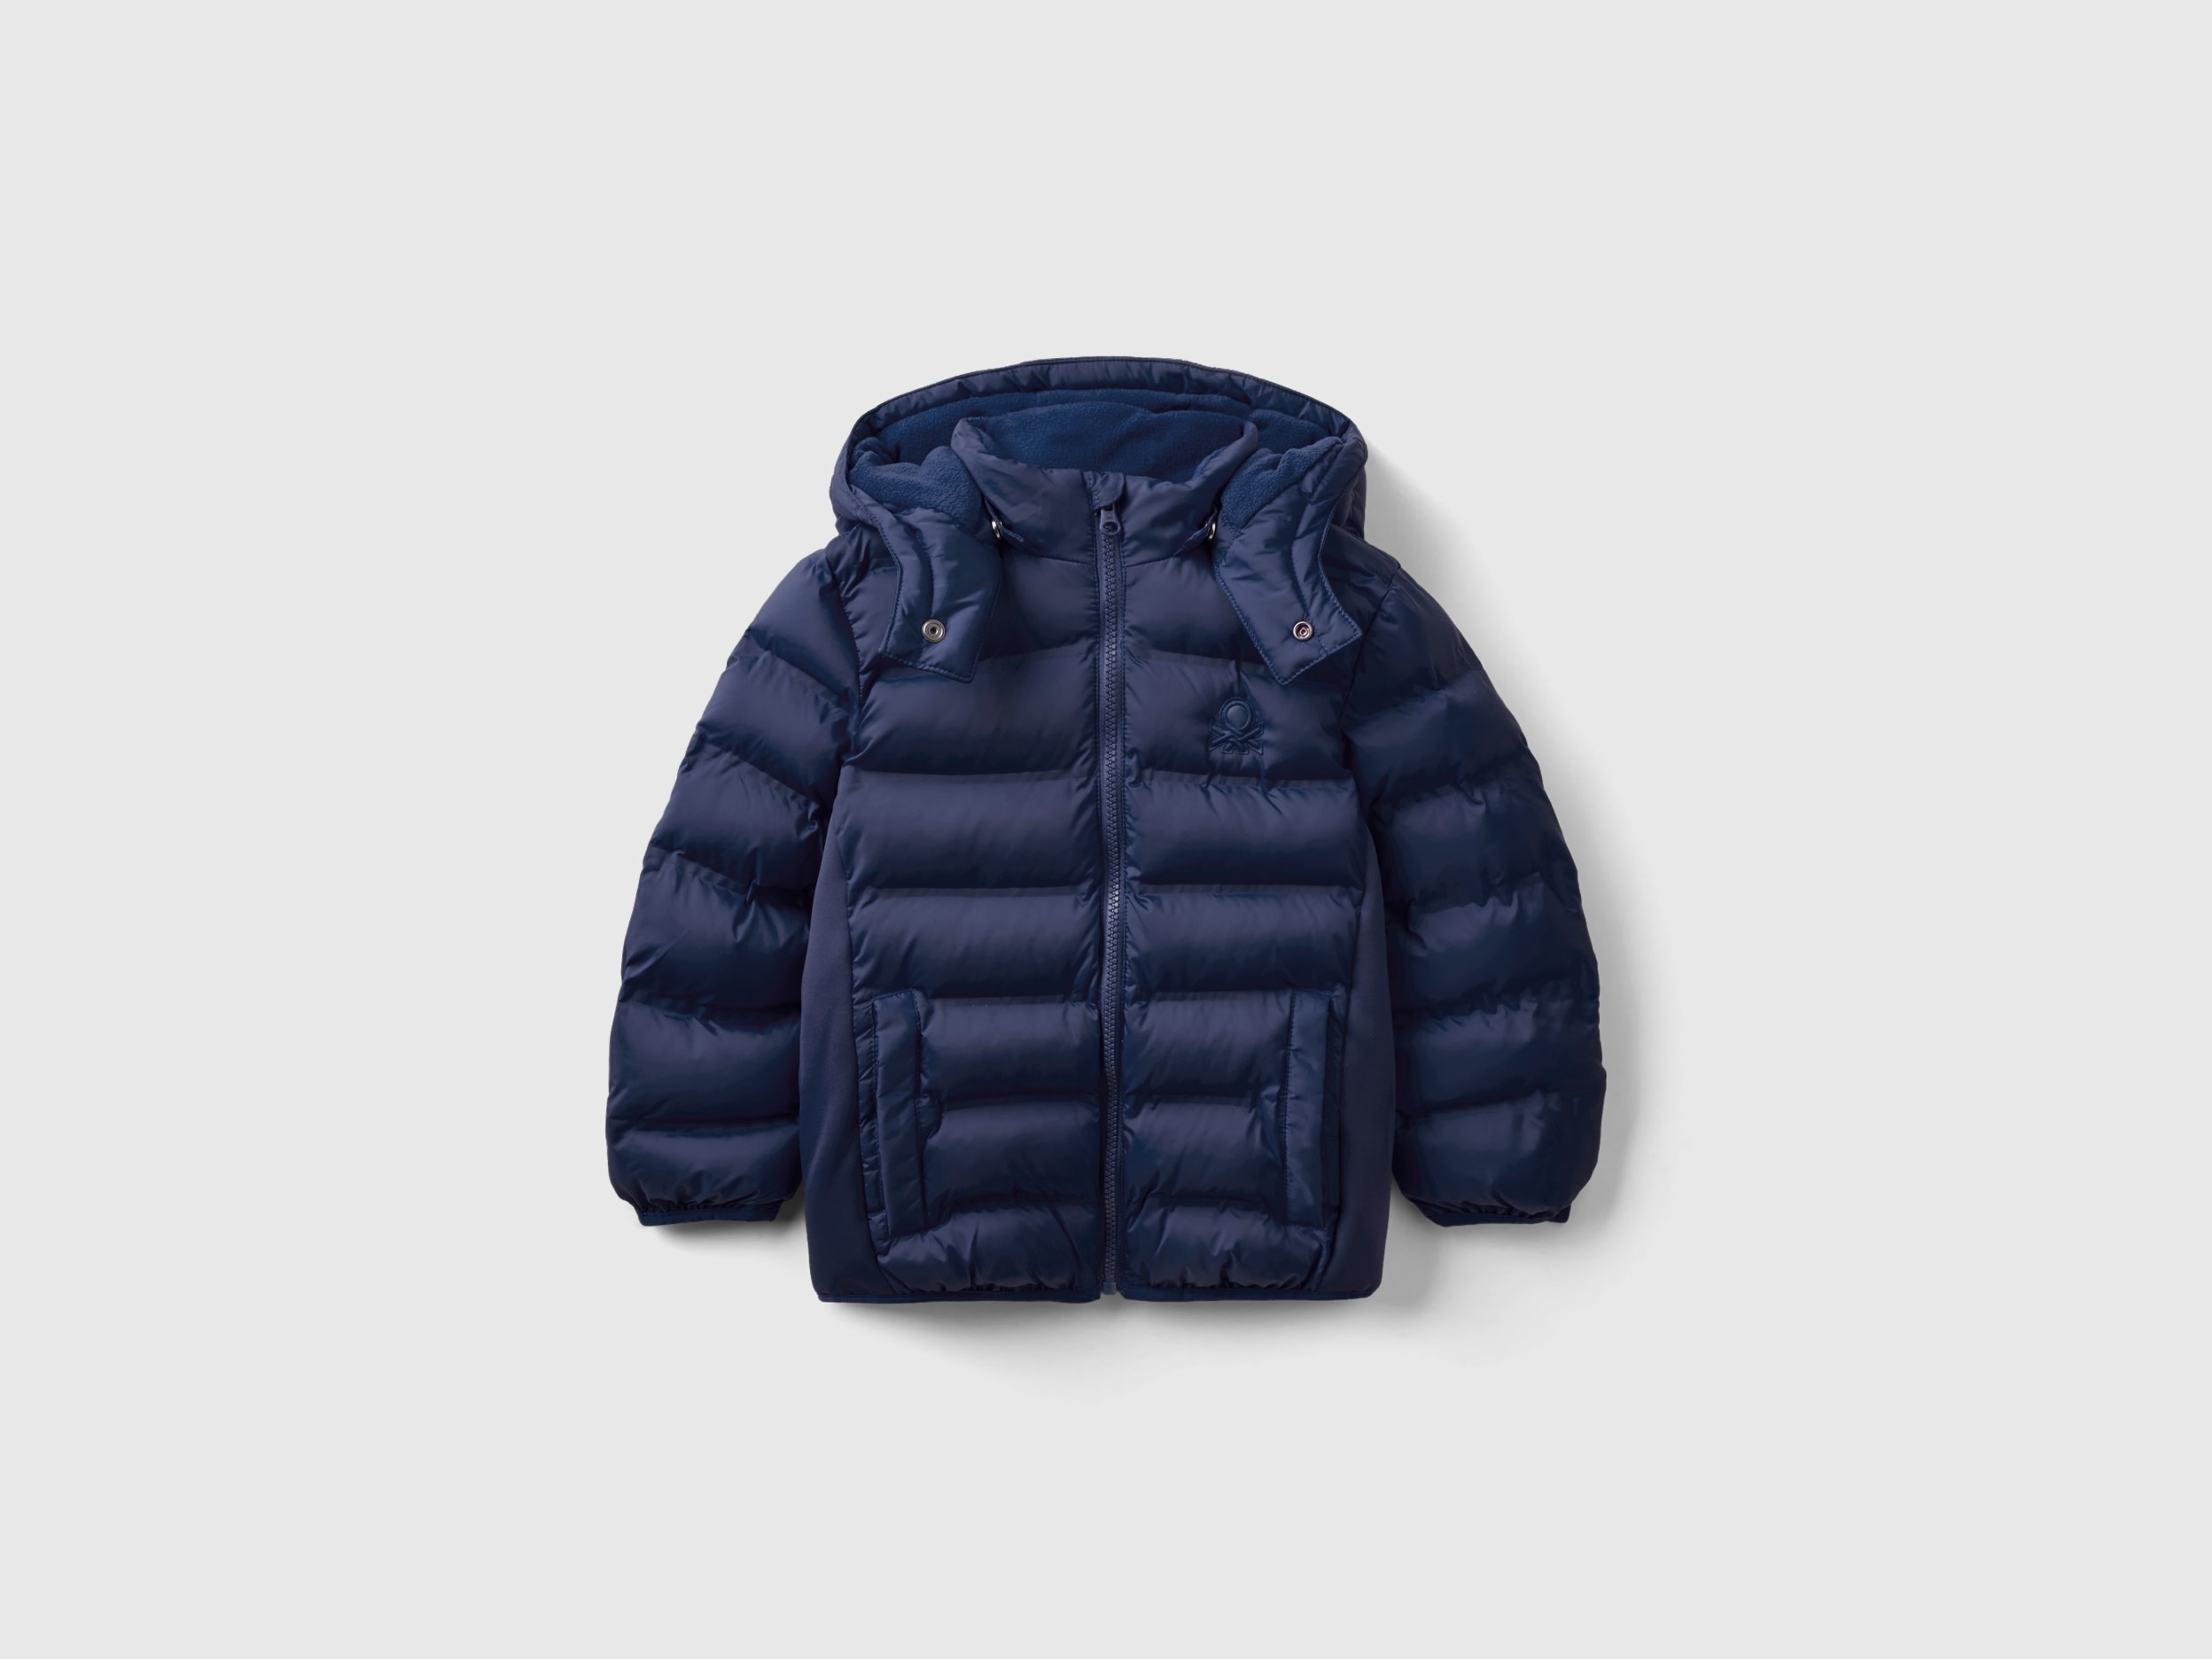 Benetton, Jacket With Neoprene Details, size 3-4, Dark Blue, Kids